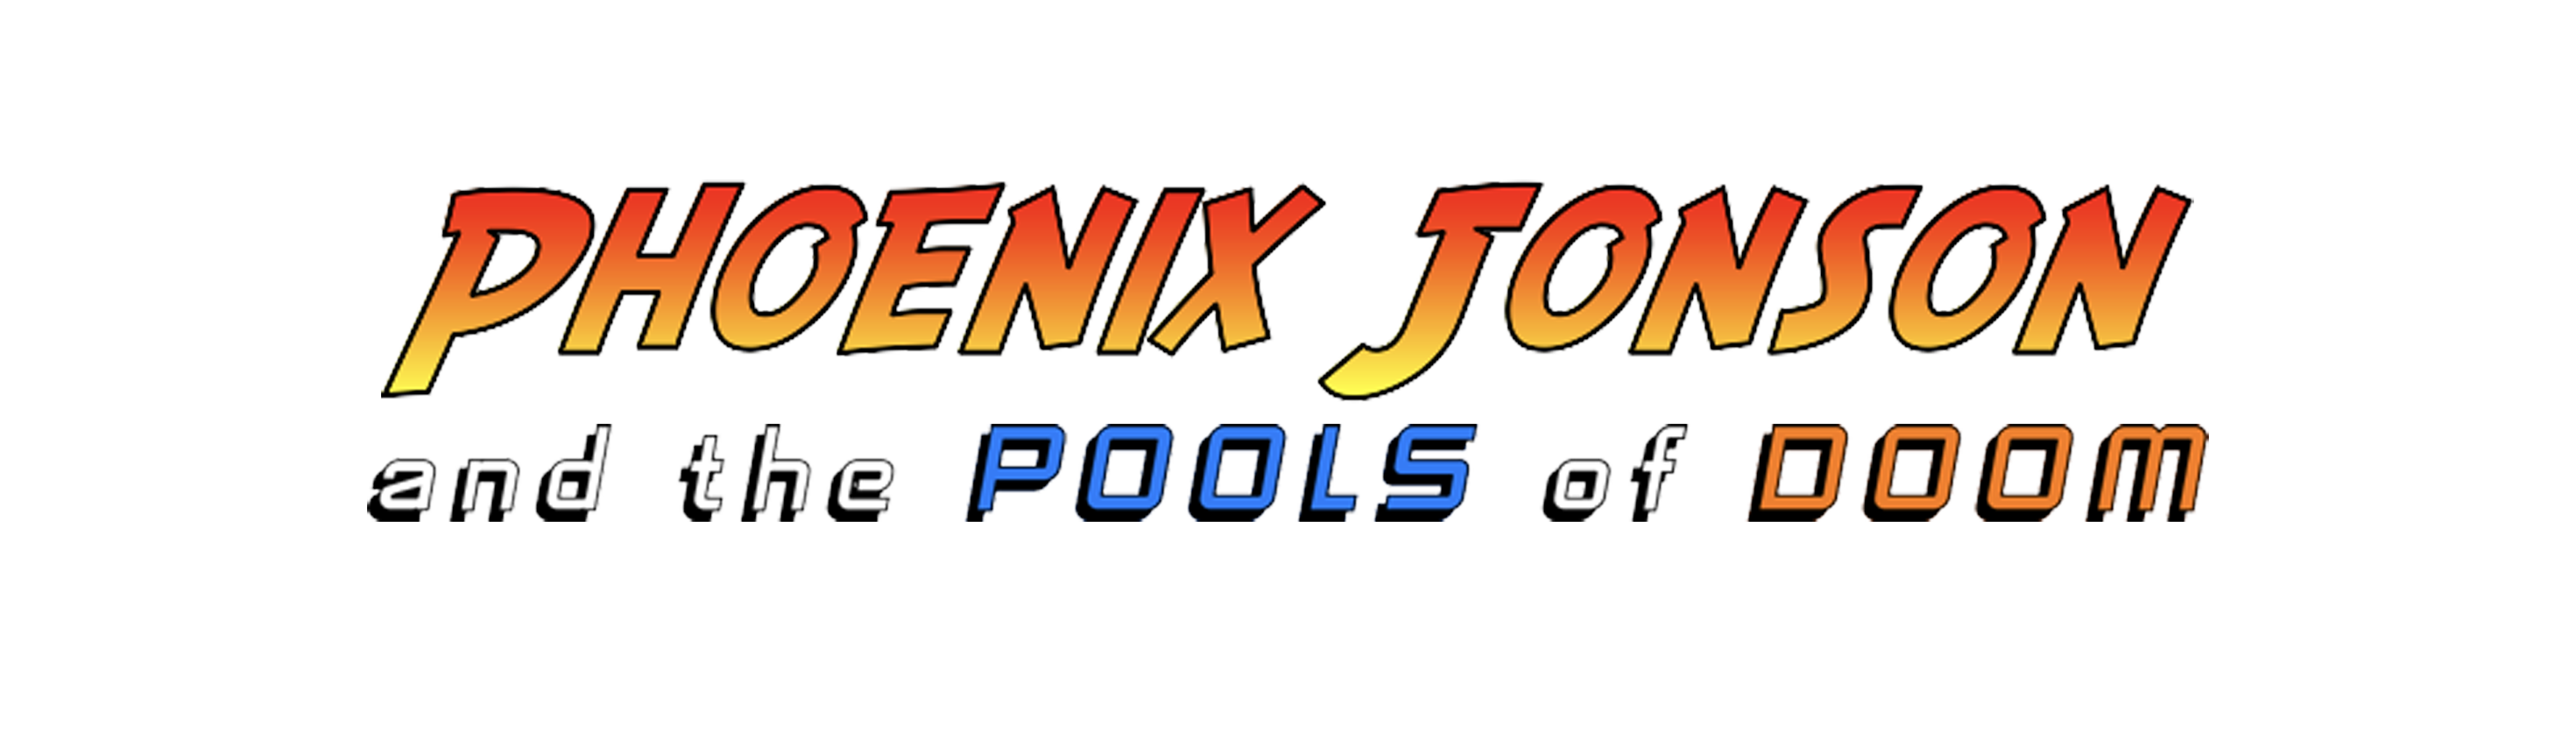 Phoenix Jonson and the Pools of Doom Logo